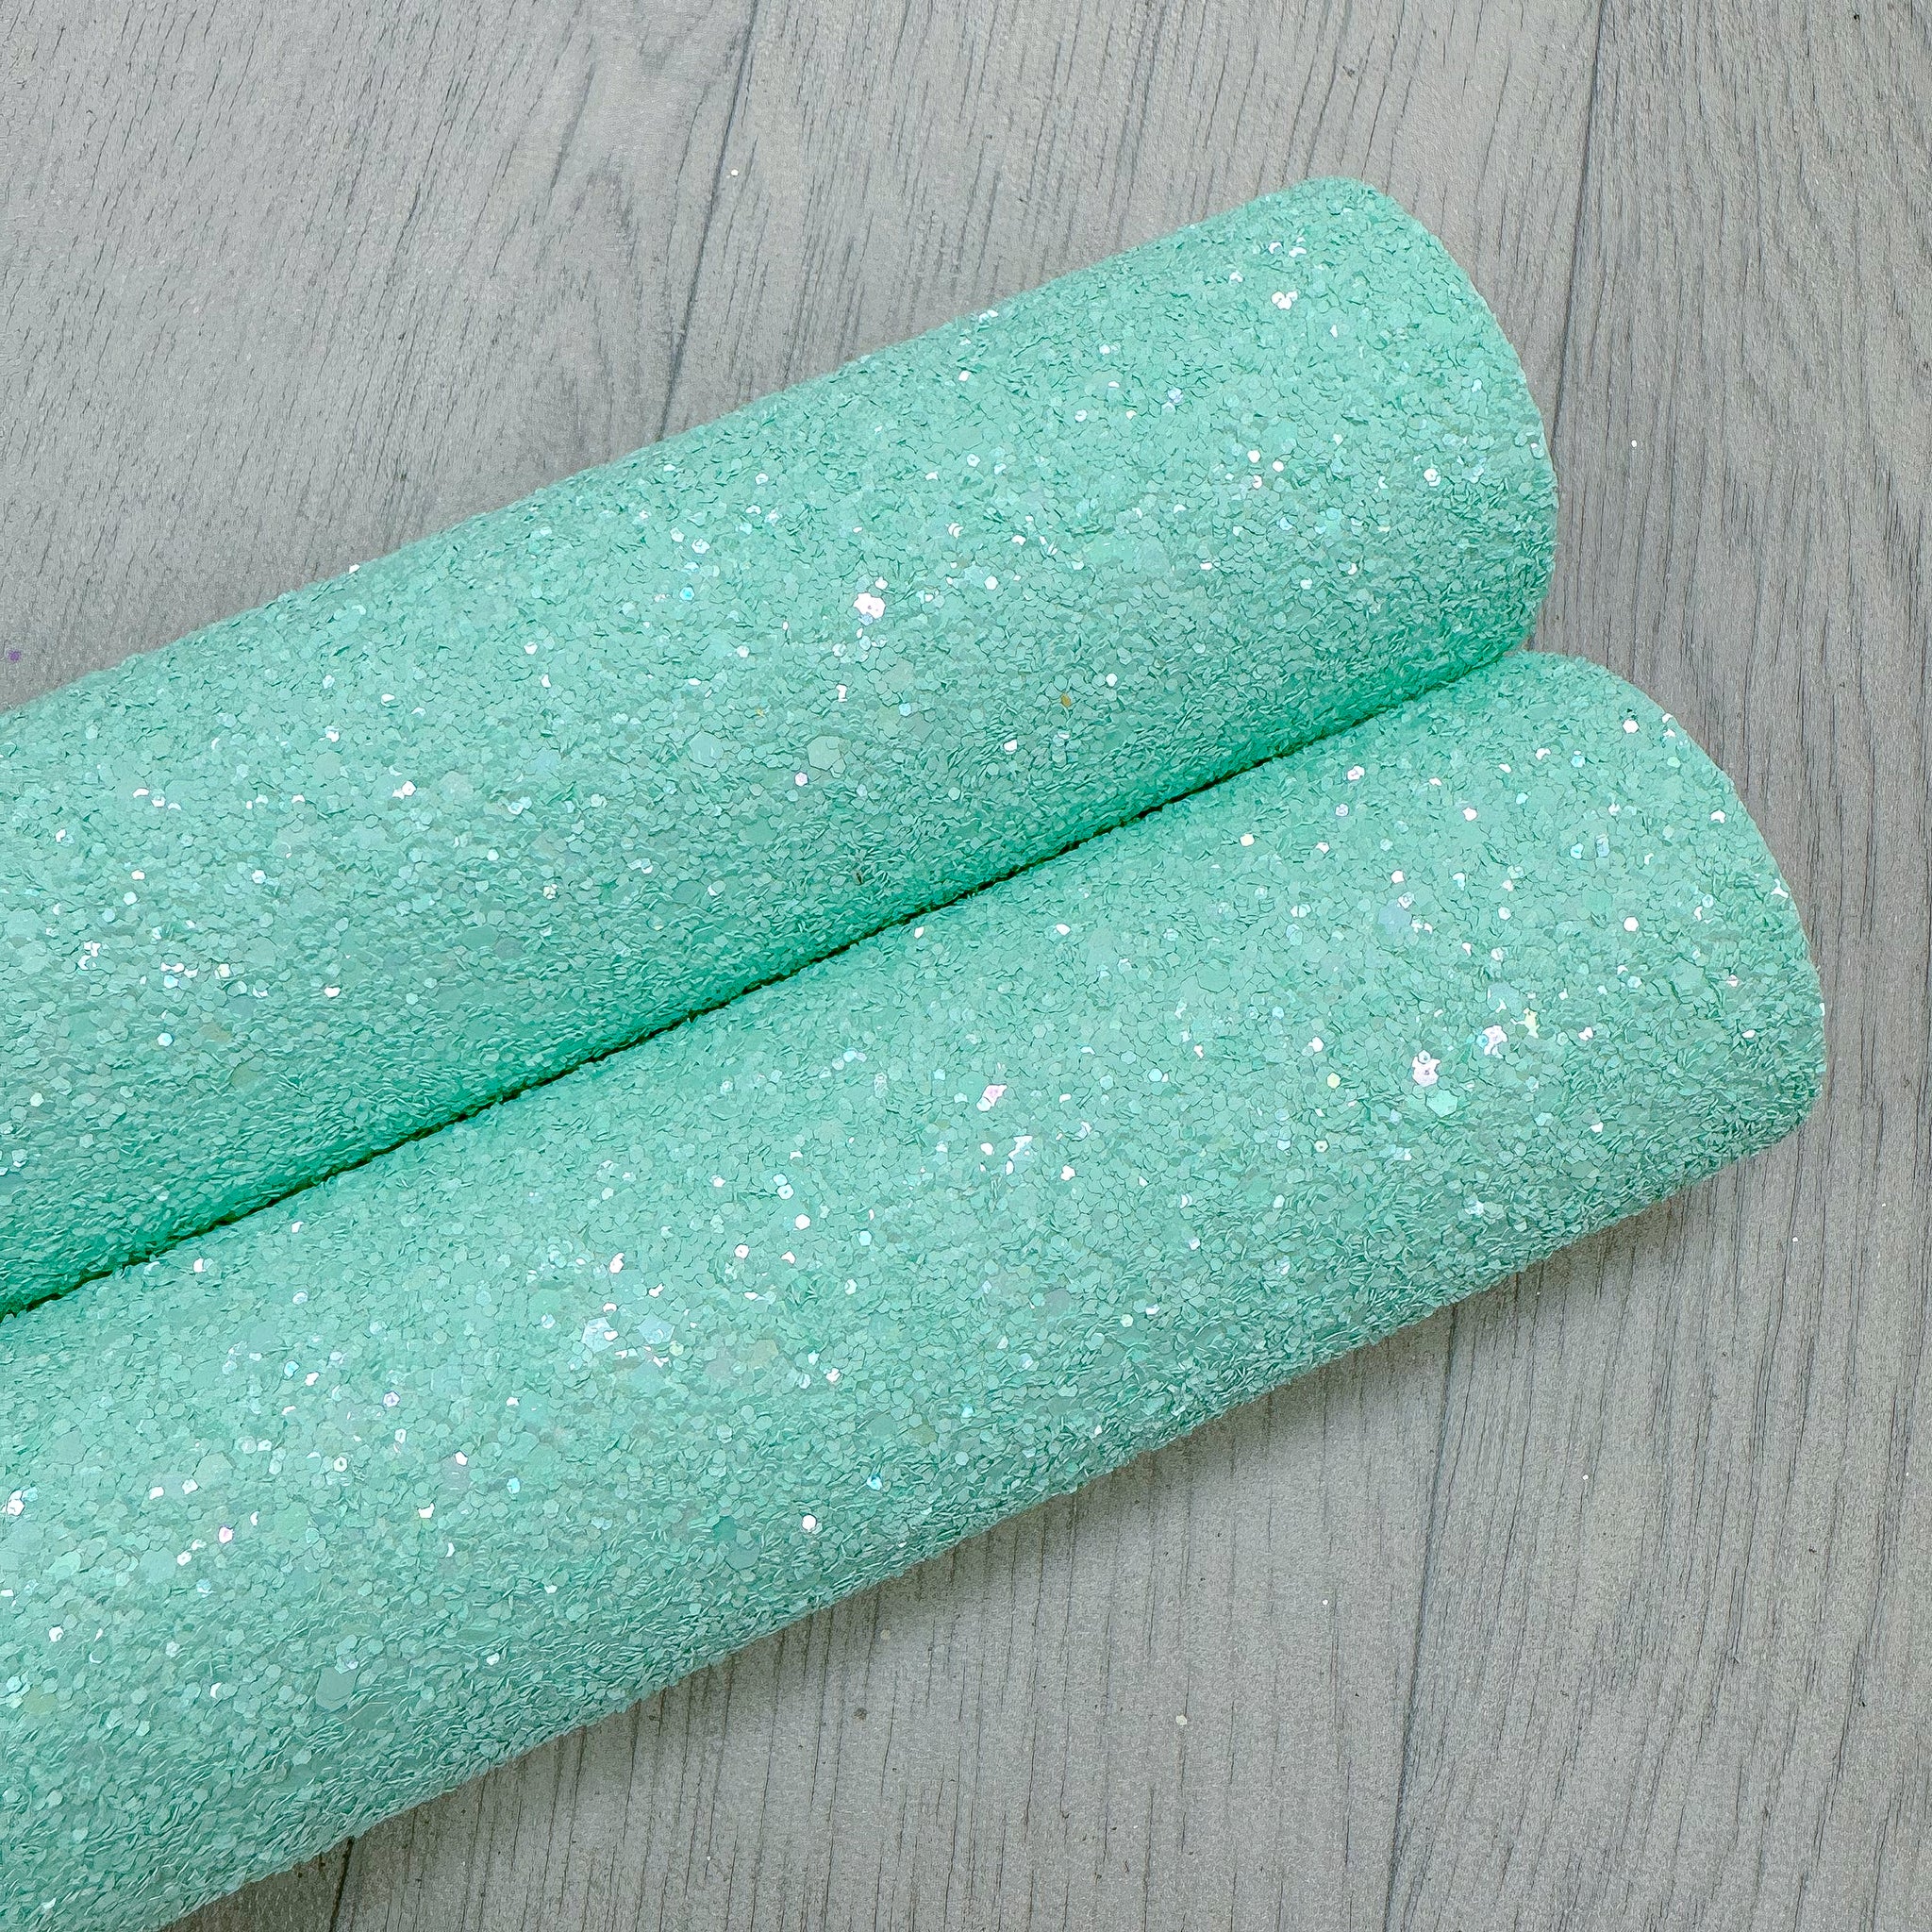 Mint green chunky glitter mermaid sparkle 